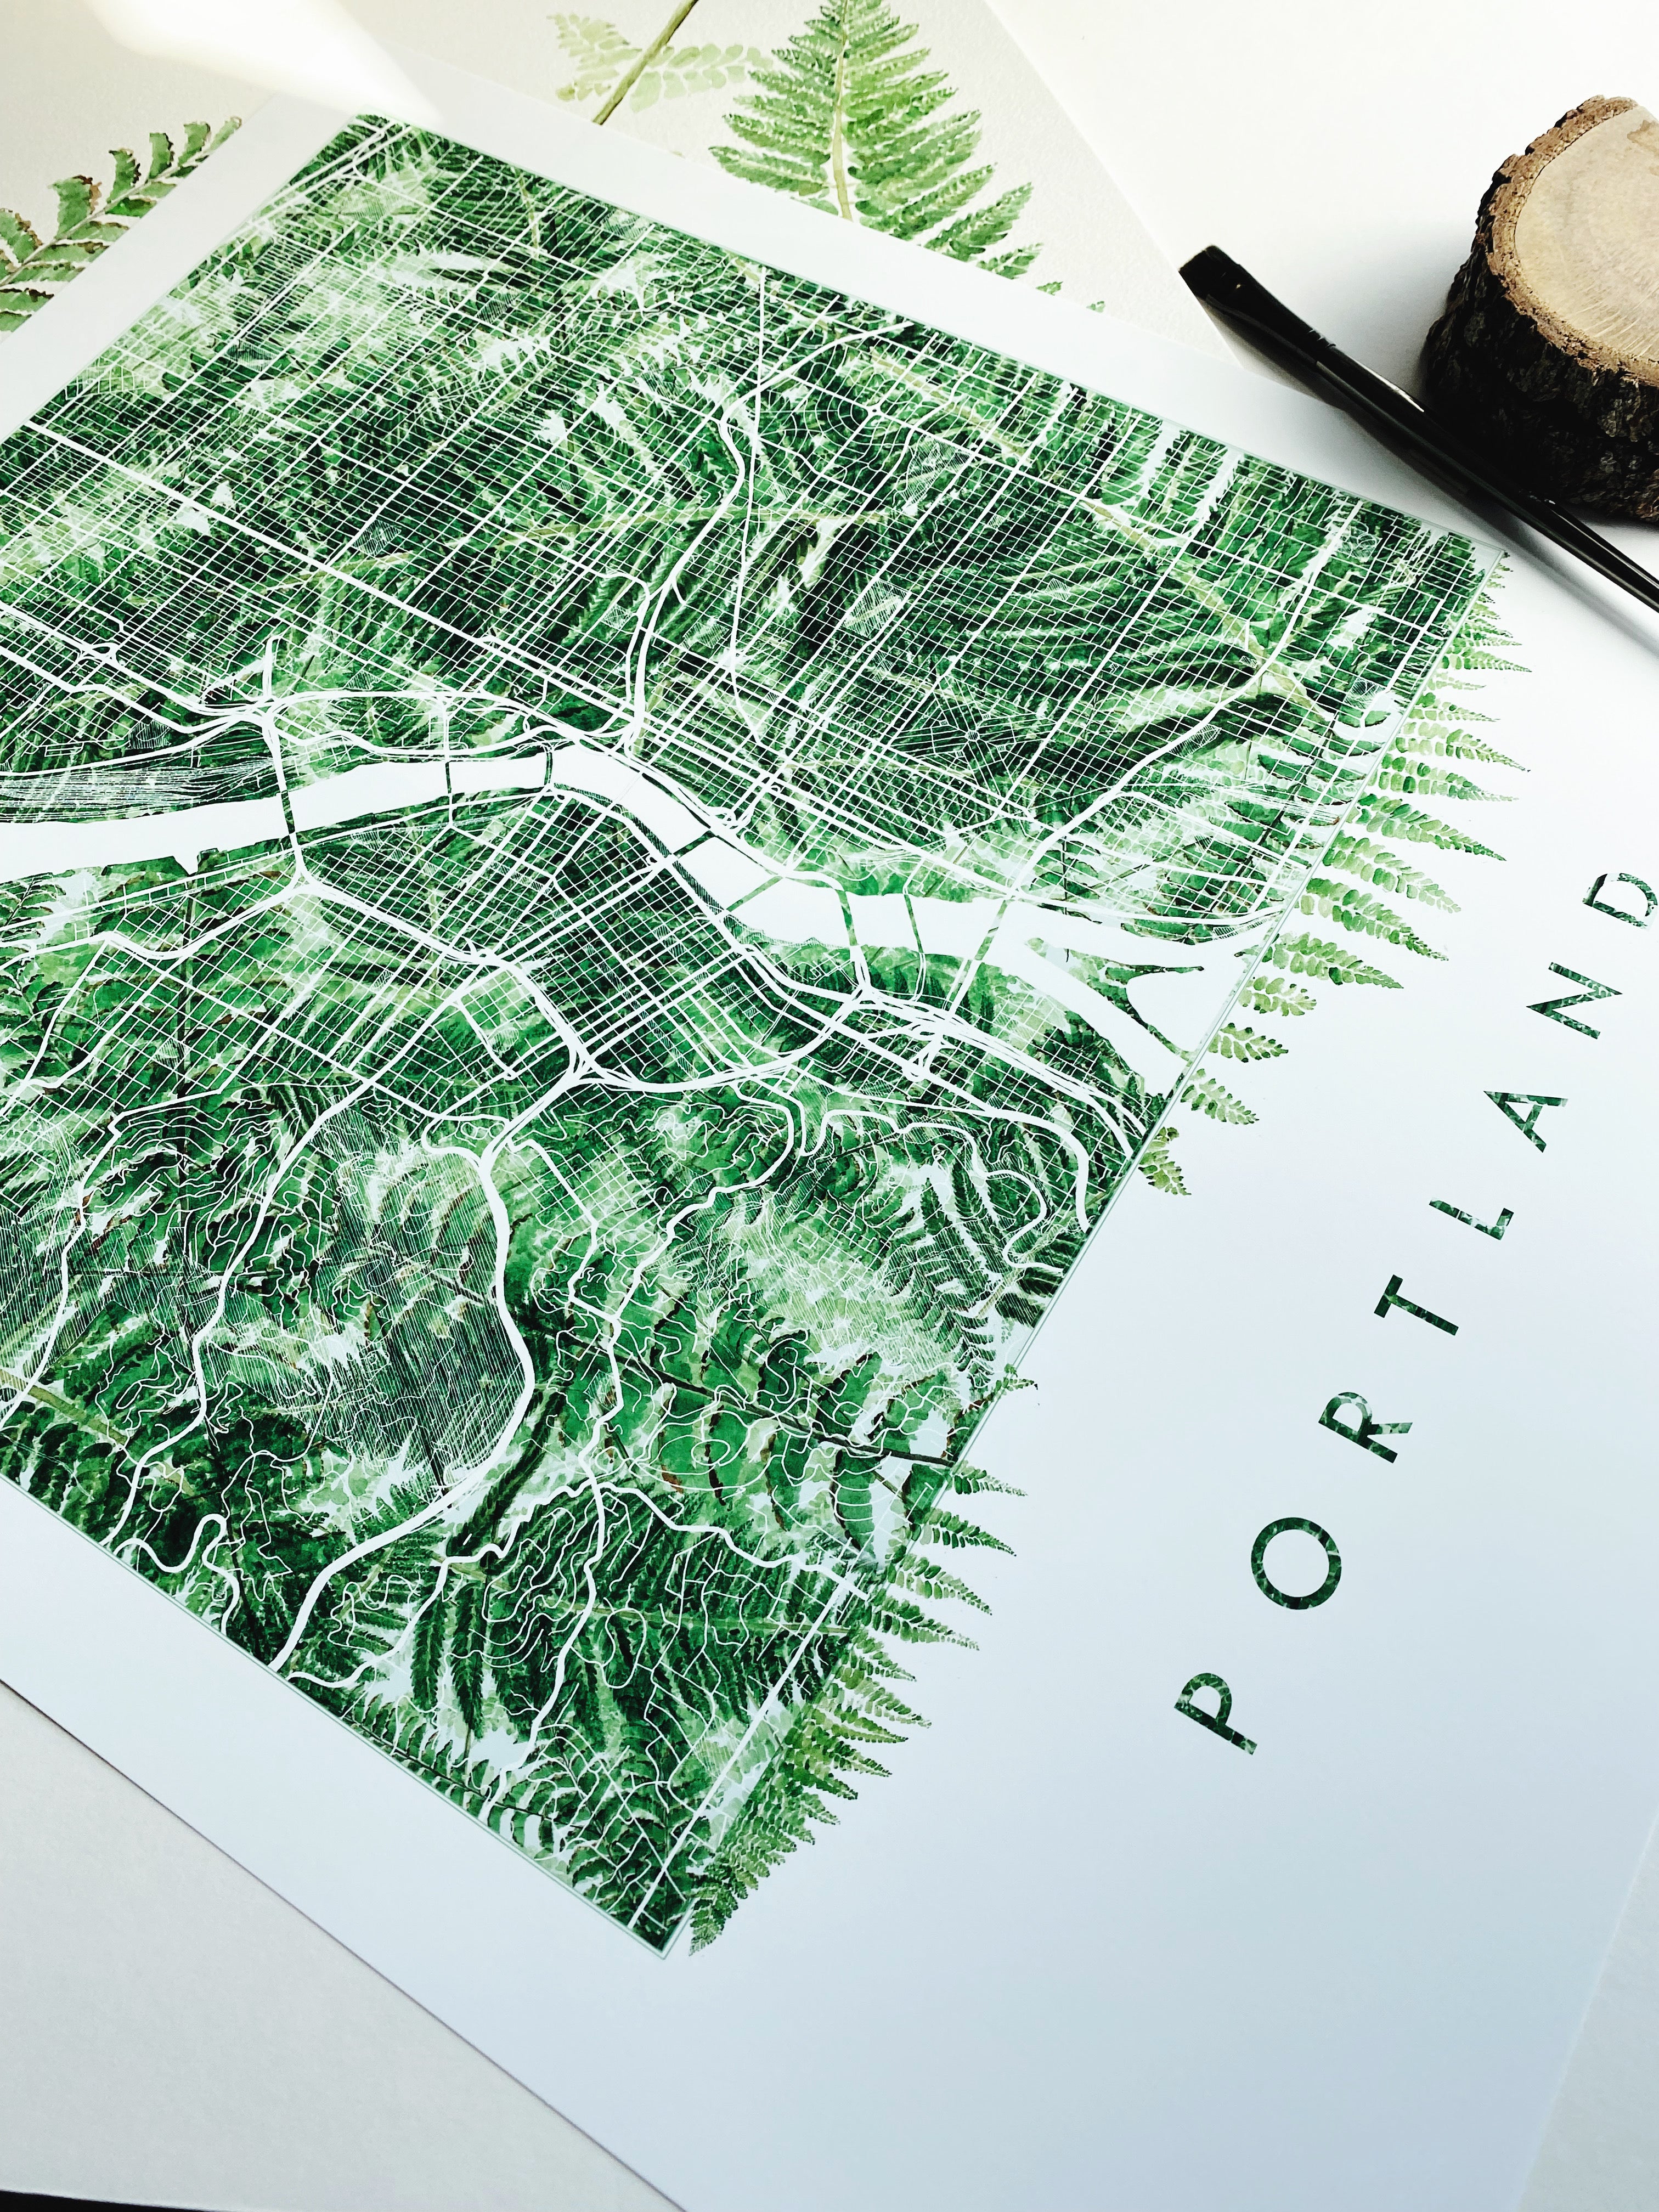 PORTLAND Oregon Ferns Botanical Map: PRINT